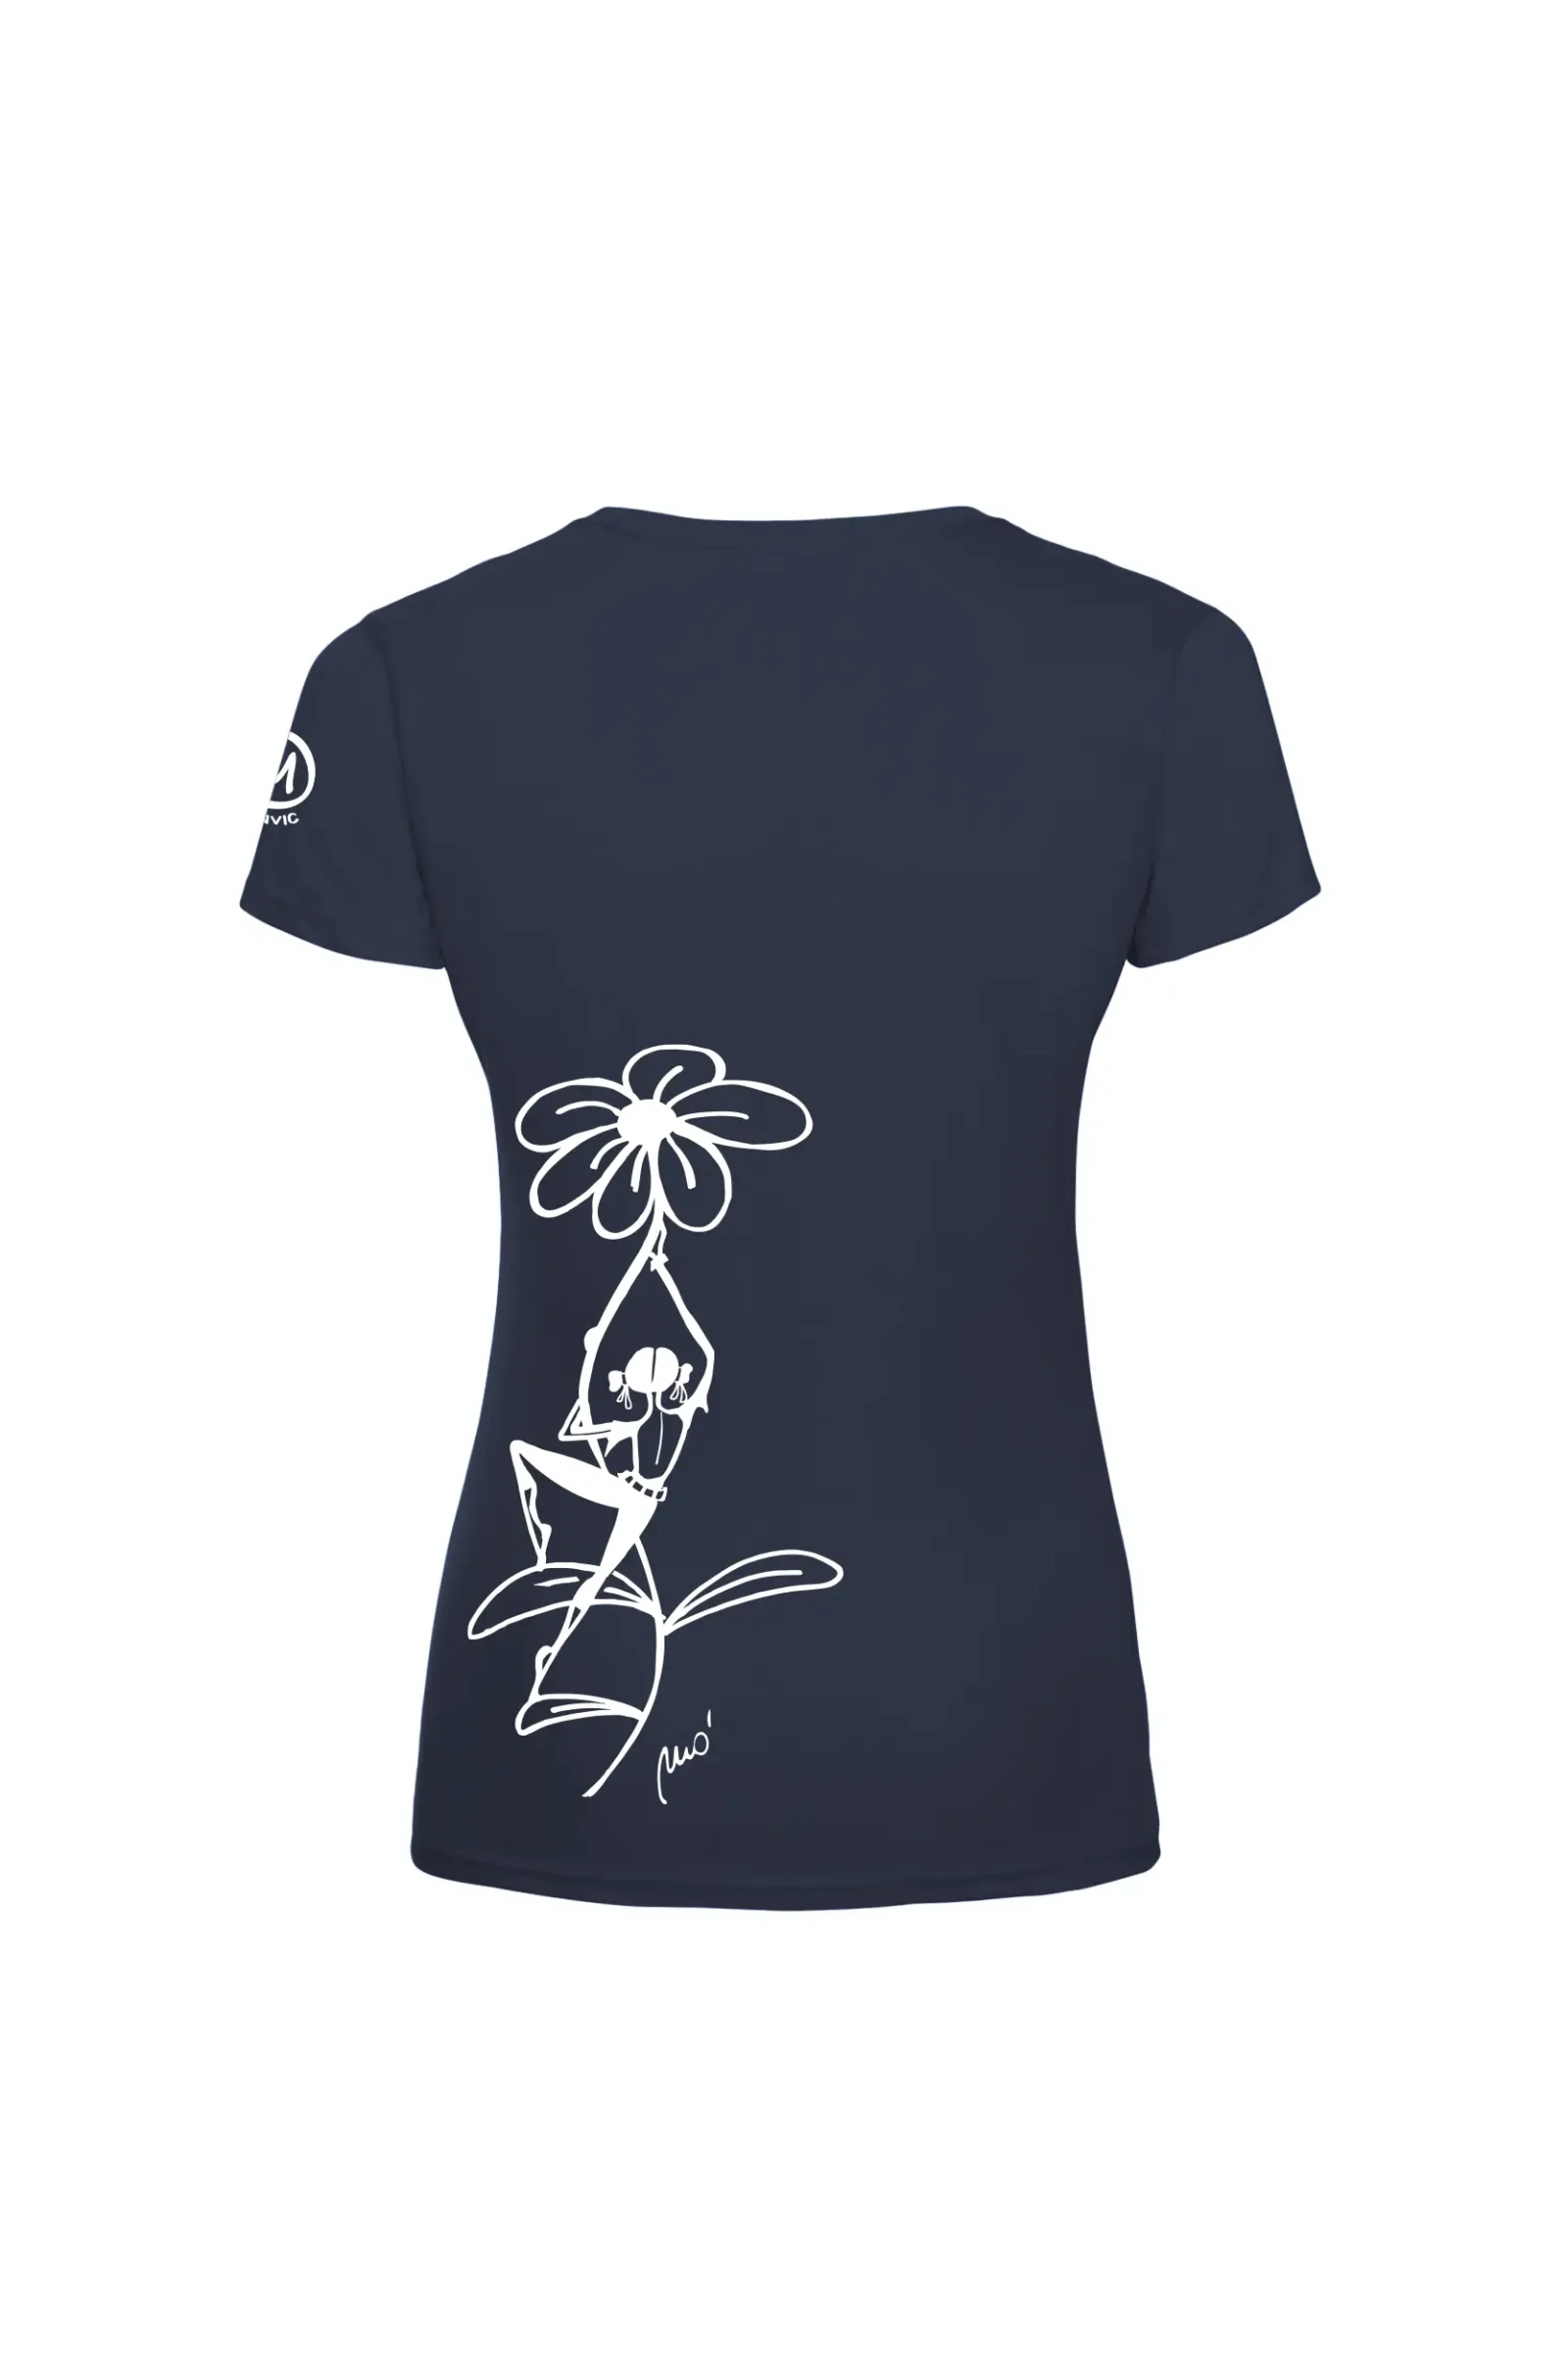 Women's climbing t-shirt - navy blue cotton - "Carla" SHARON MONVIC